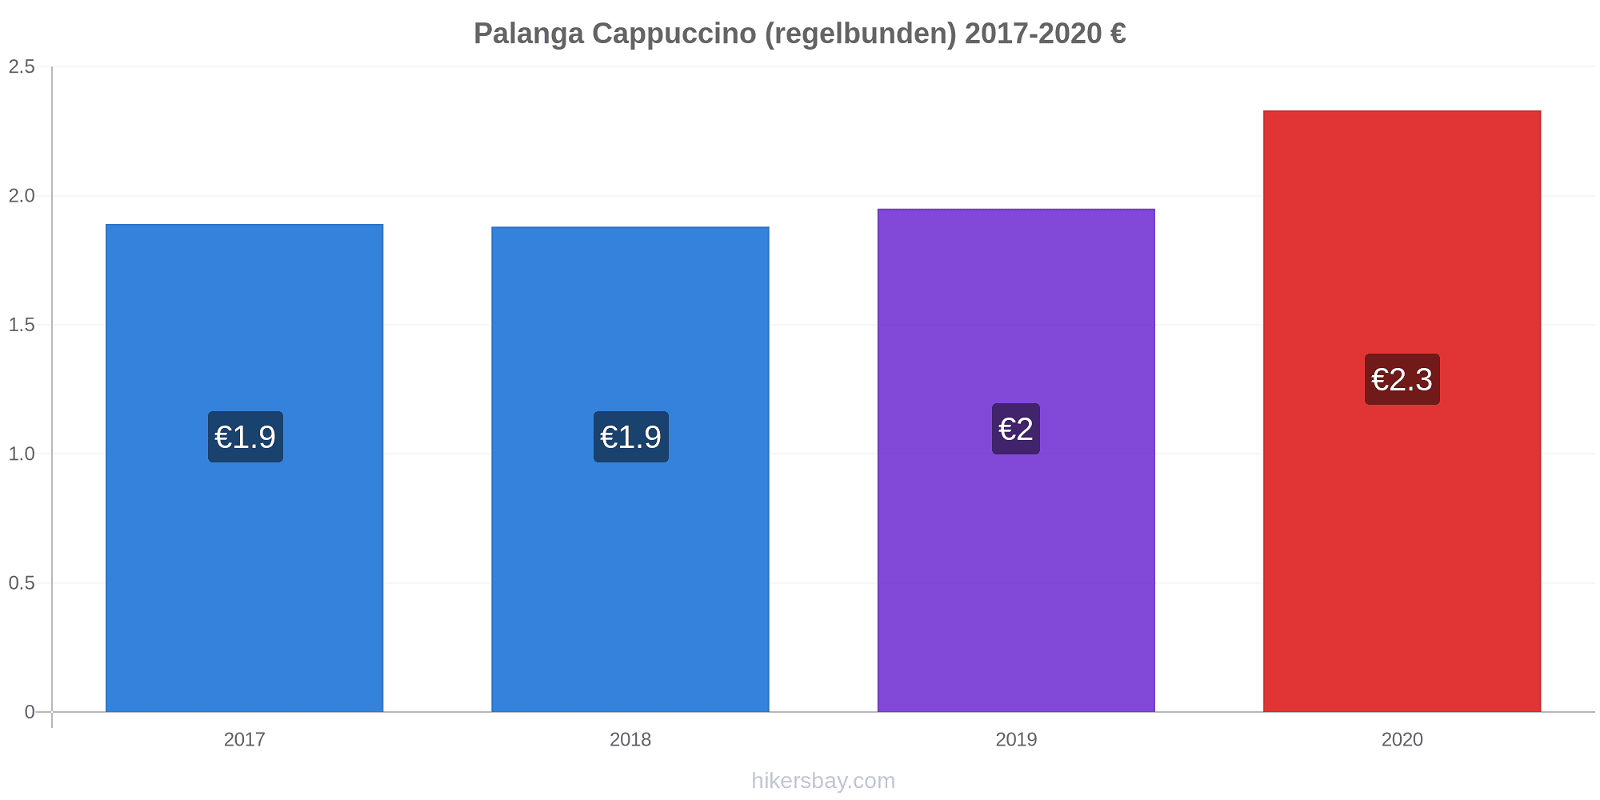 Palanga prisförändringar Cappuccino (regelbunden) hikersbay.com